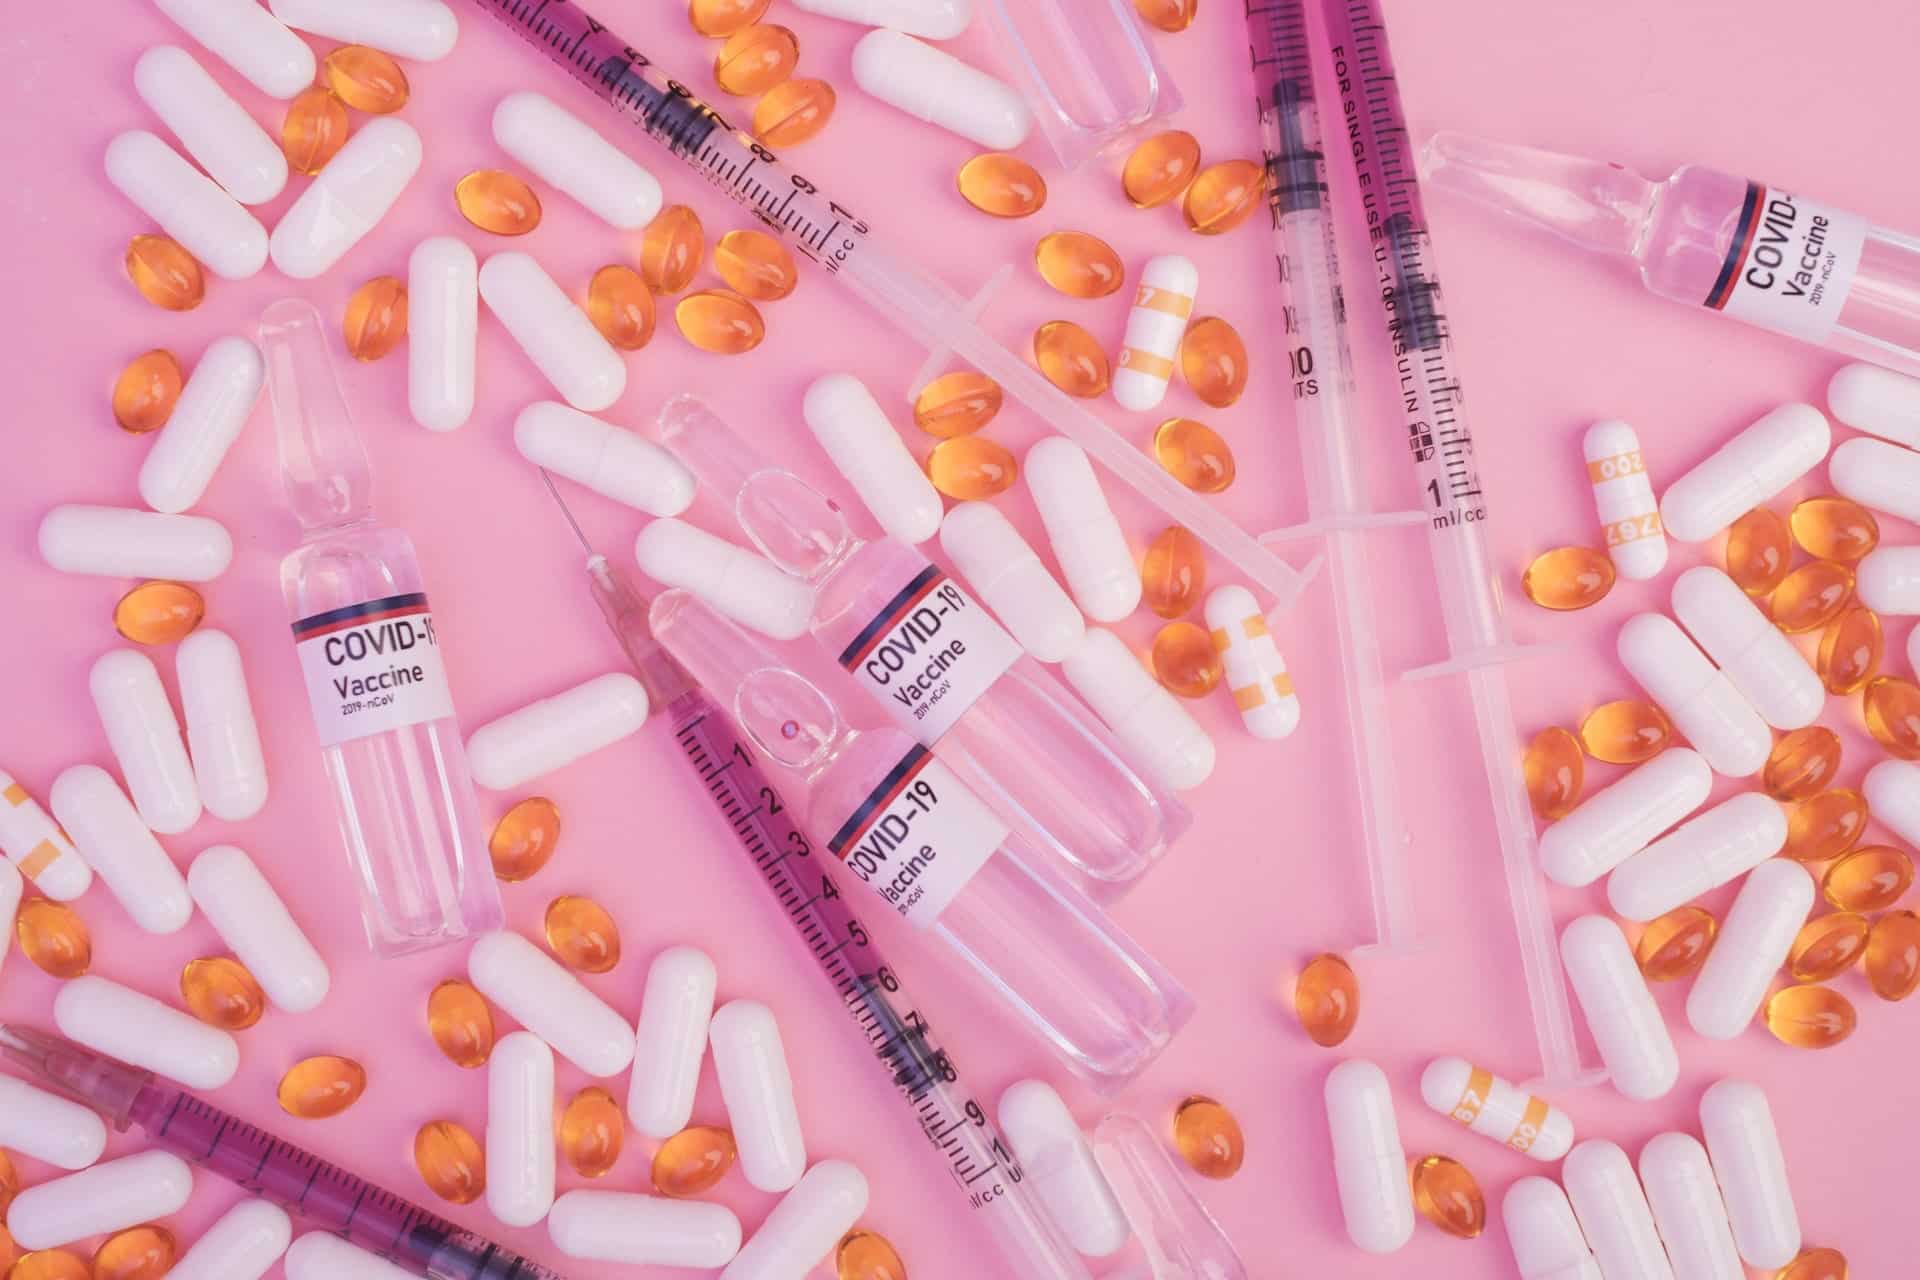 pexels-alena-shekhovtcova- photo of pills and needles on pink background